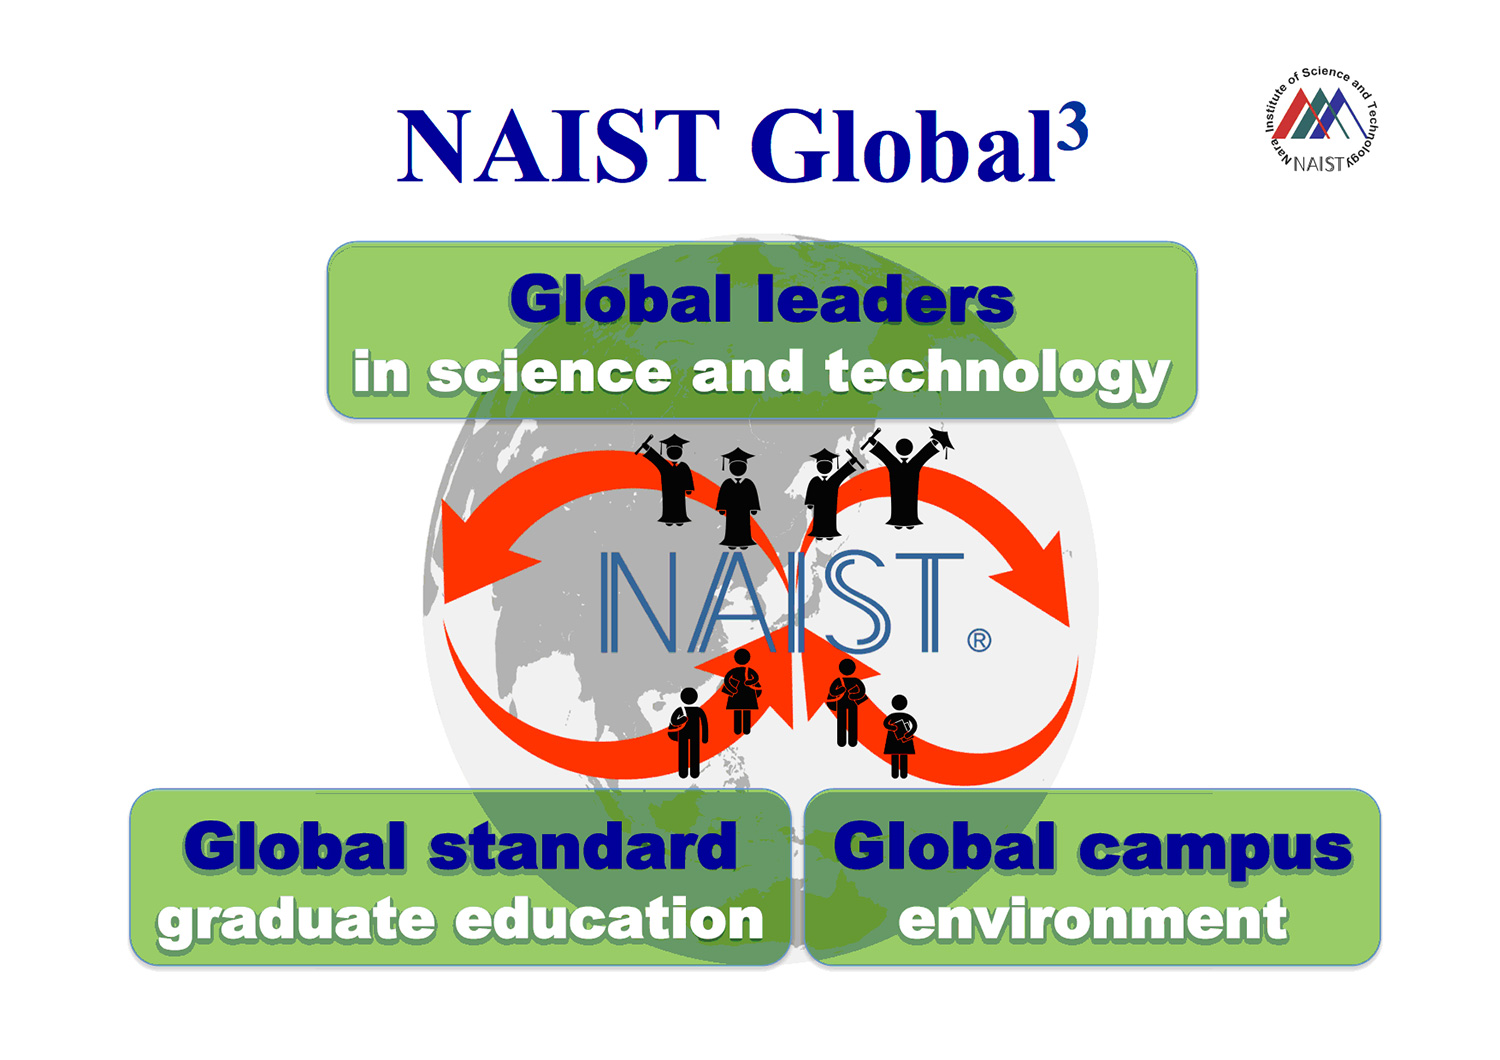 NAIST Global3 Image